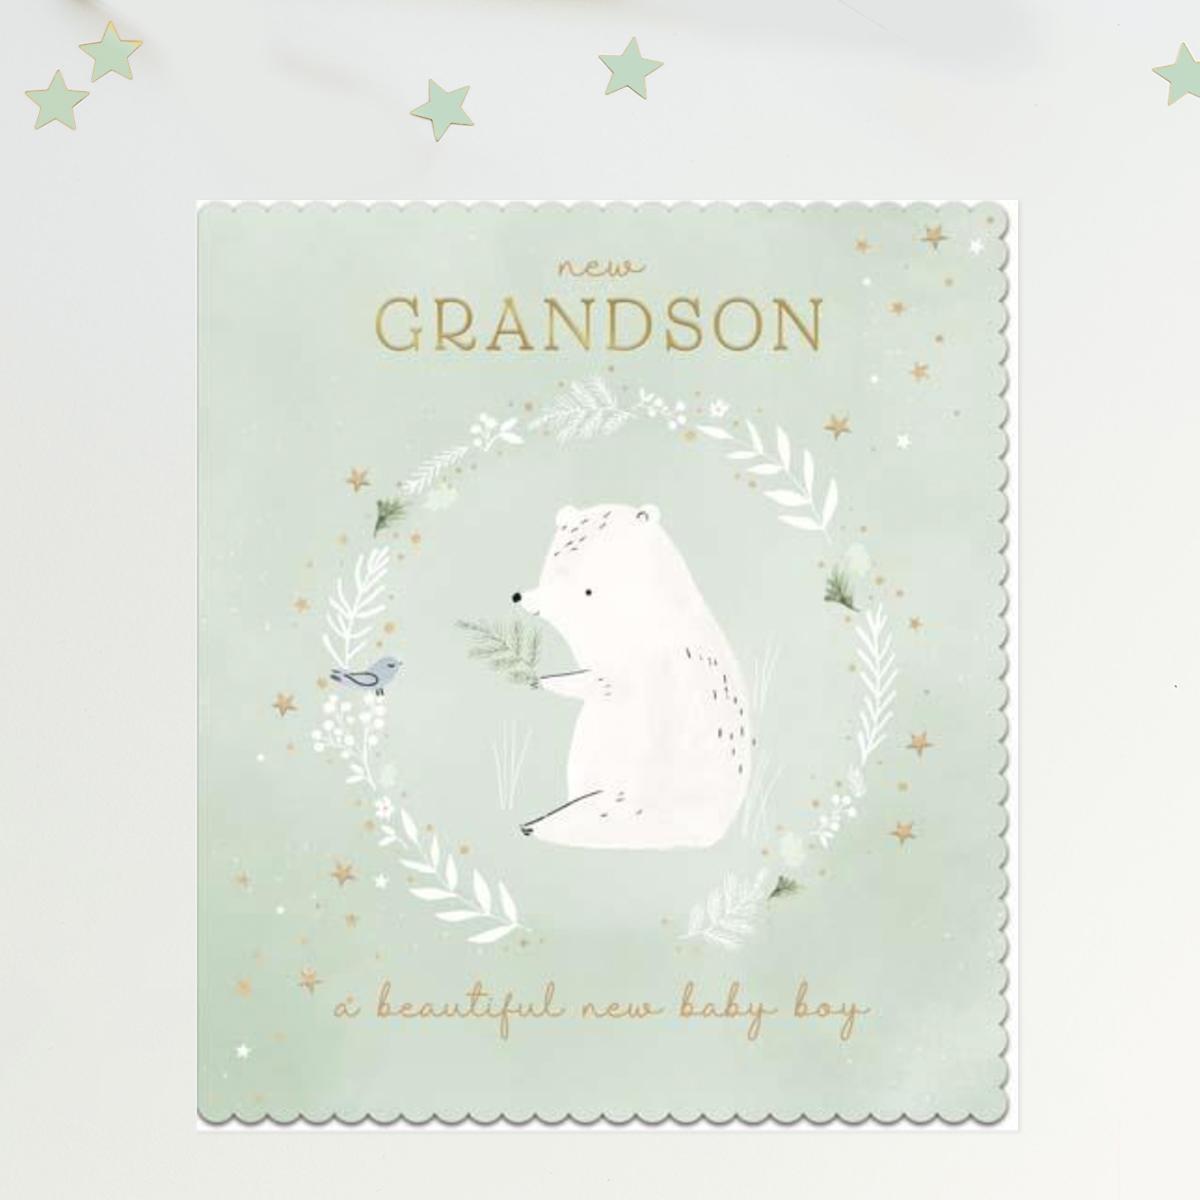 New Grandson Card Front Image